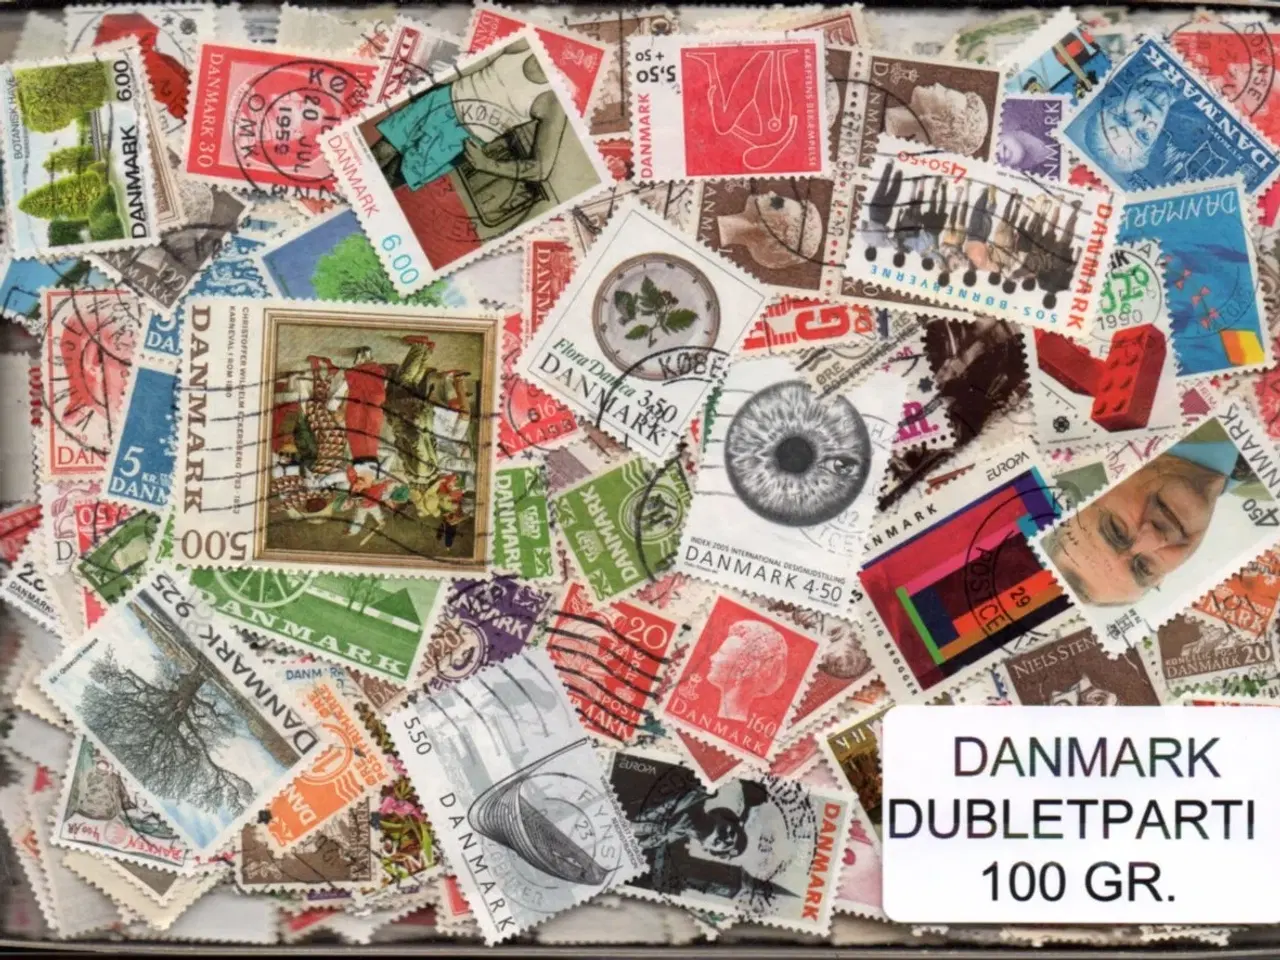 Billede 1 - Danmark Dubletparti 100 g. - Nyt parti - Hjemkommet 2 - 12 - 2020